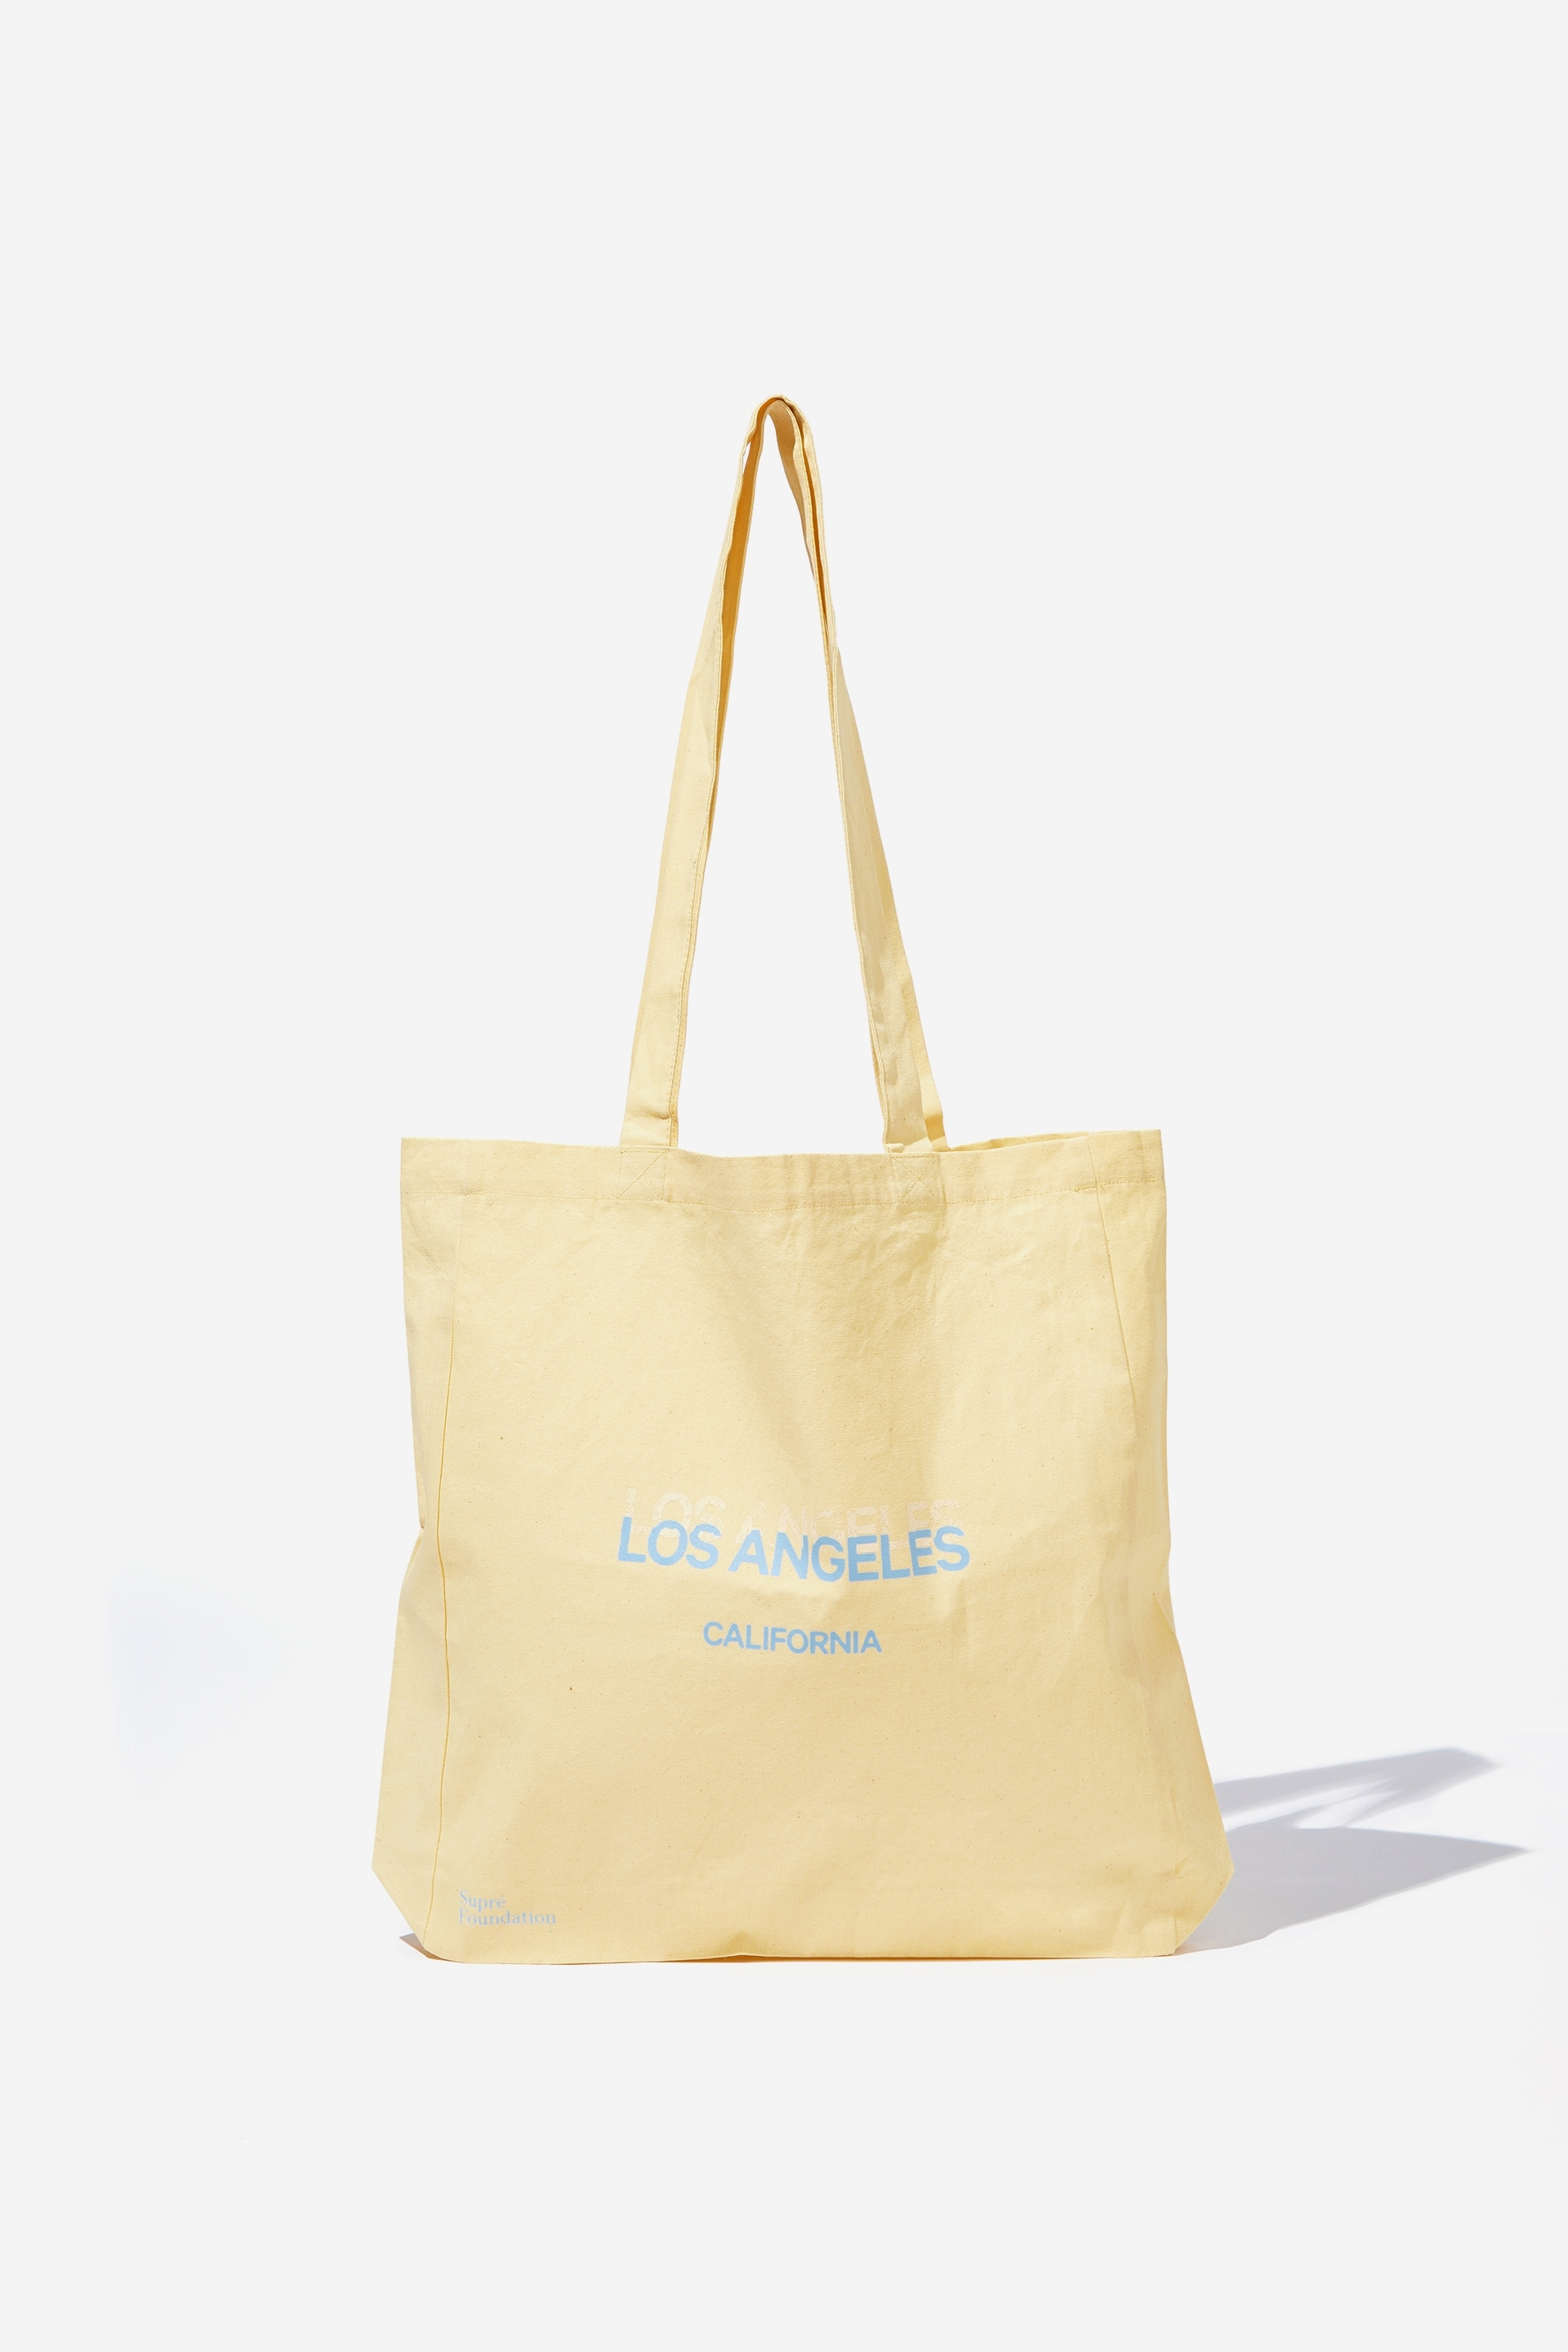 Cotton On Foundation - Foundation Supre Organic Tote Bag - Los angeles california yellow